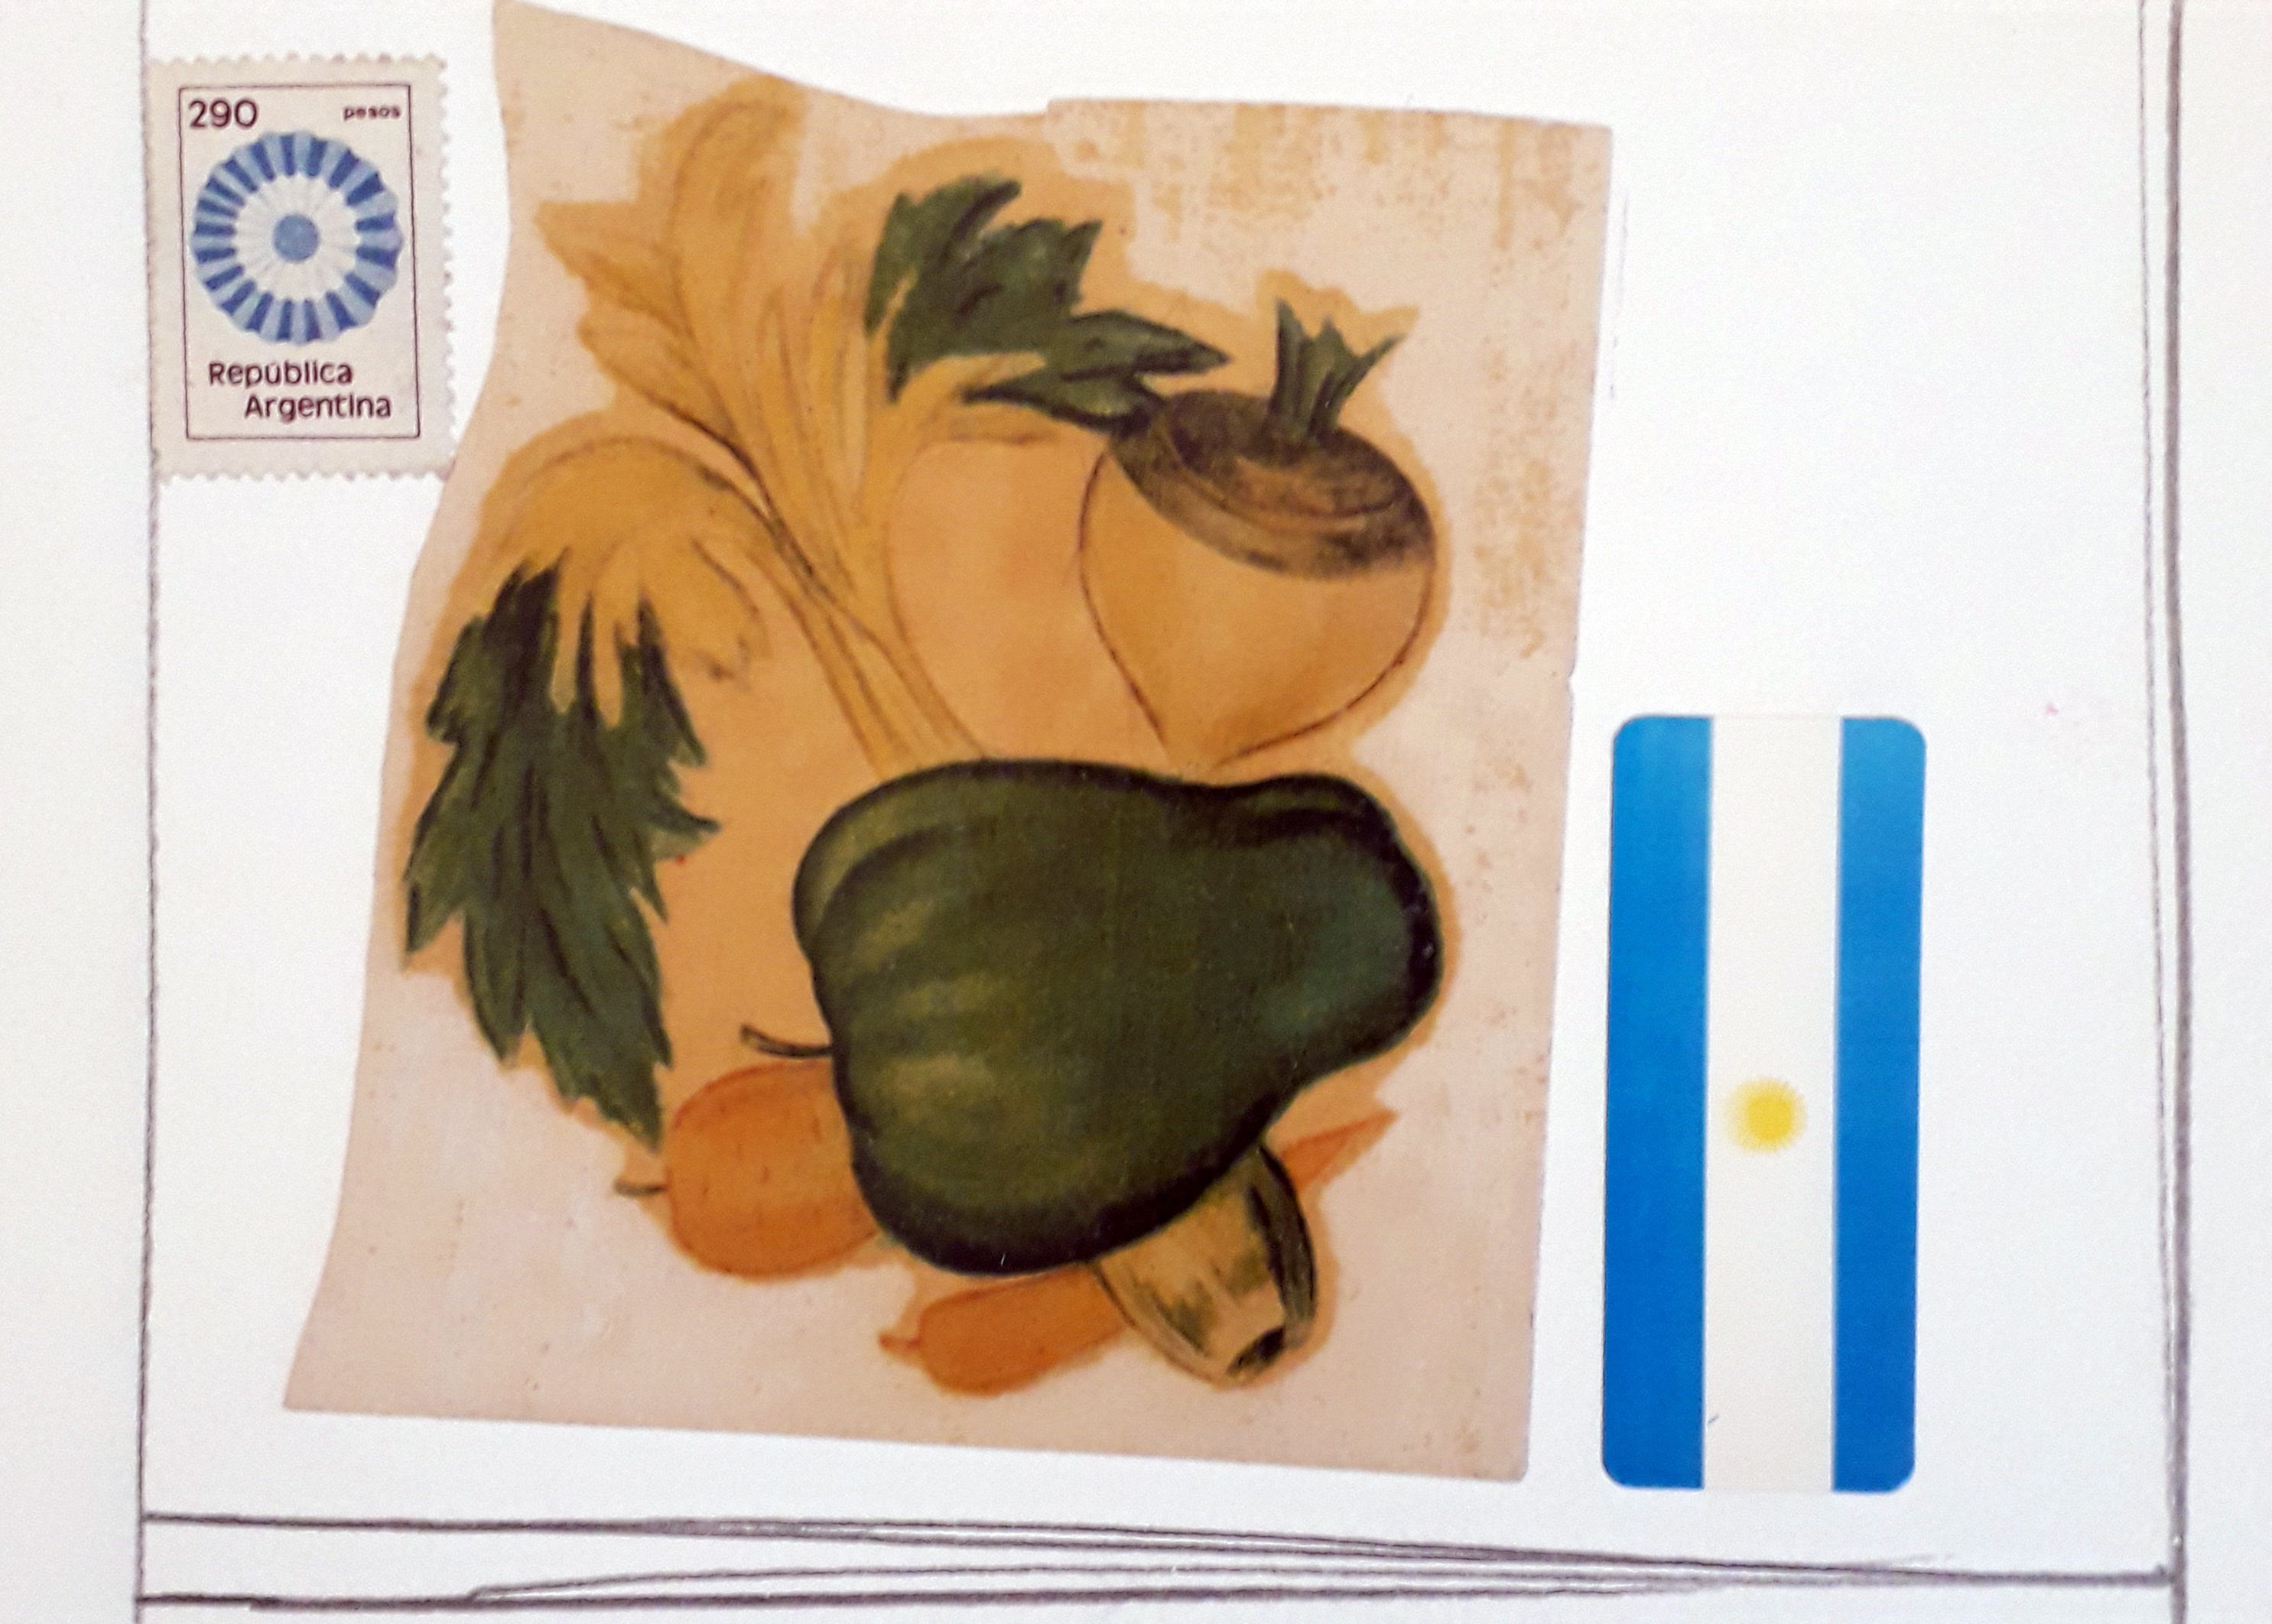 Serie pequeño formato, papel collage sobre tarjeta postal, 10 cm x 15 cm, 2020